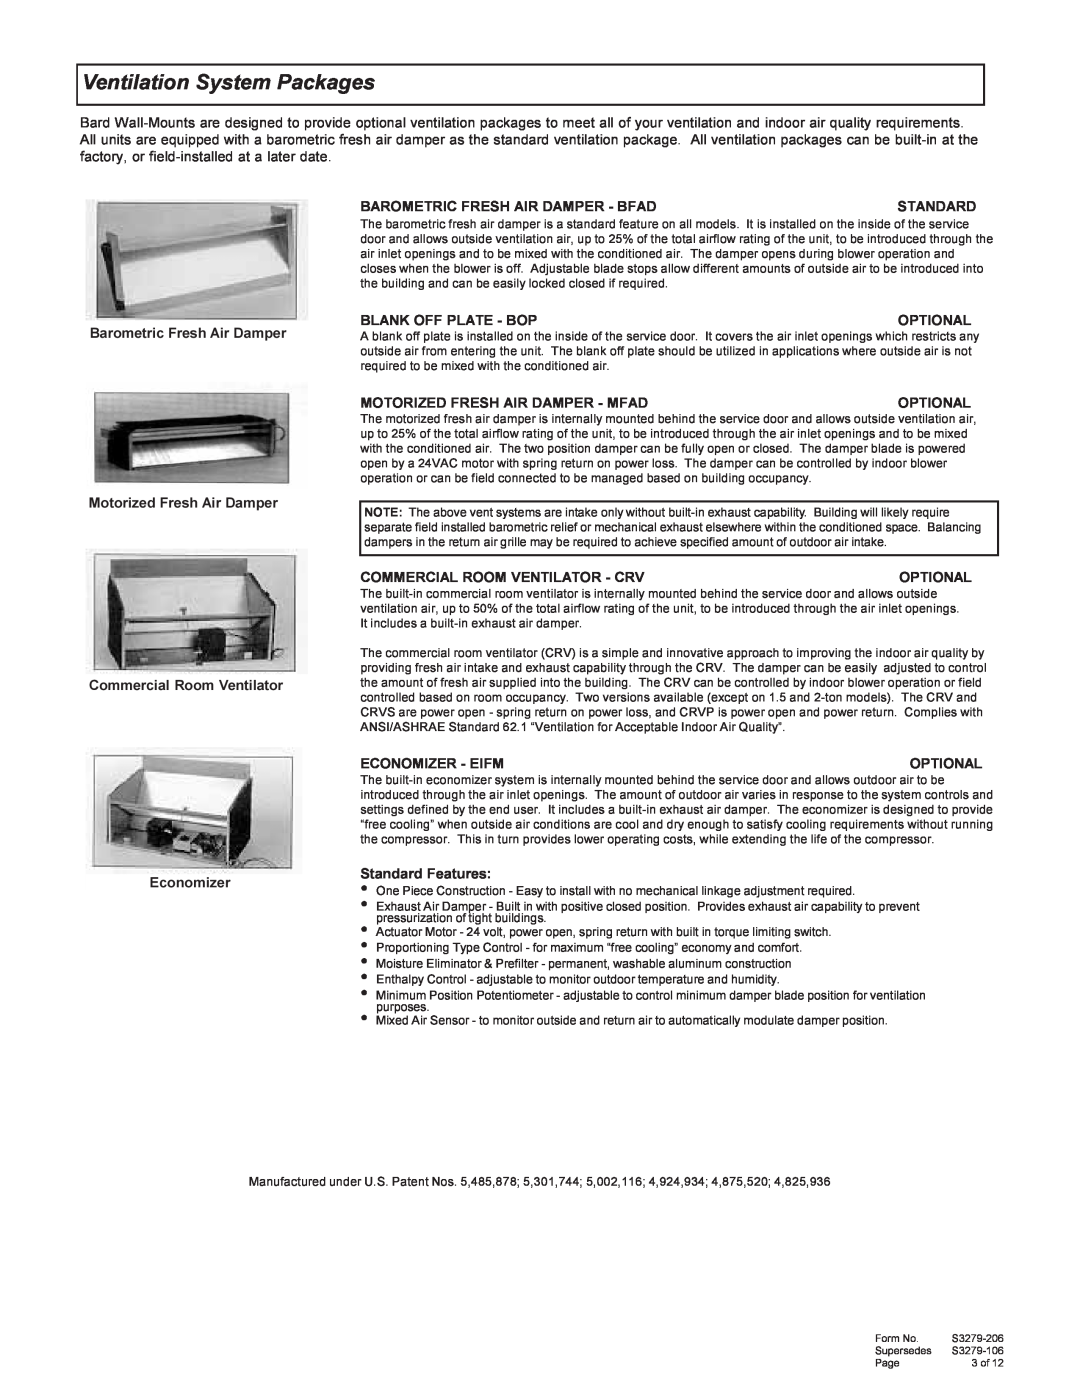 Bard 357-93-E manual Ventilation System Packages, Barometric Fresh Air Damper - Bfad 